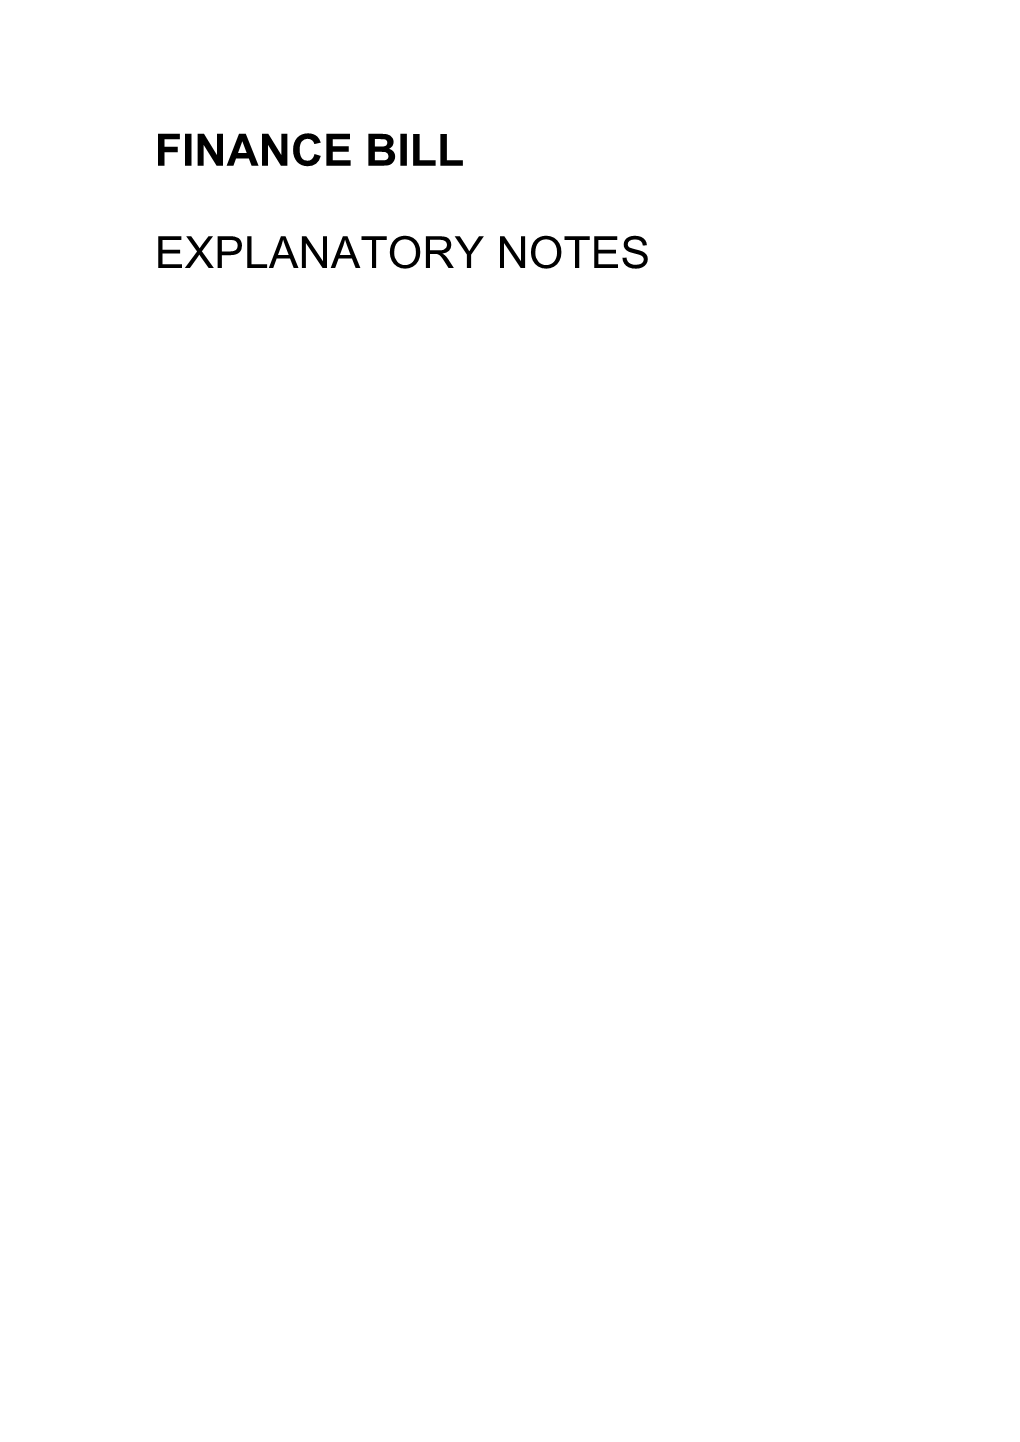 Finance Bill Explanatory Notes